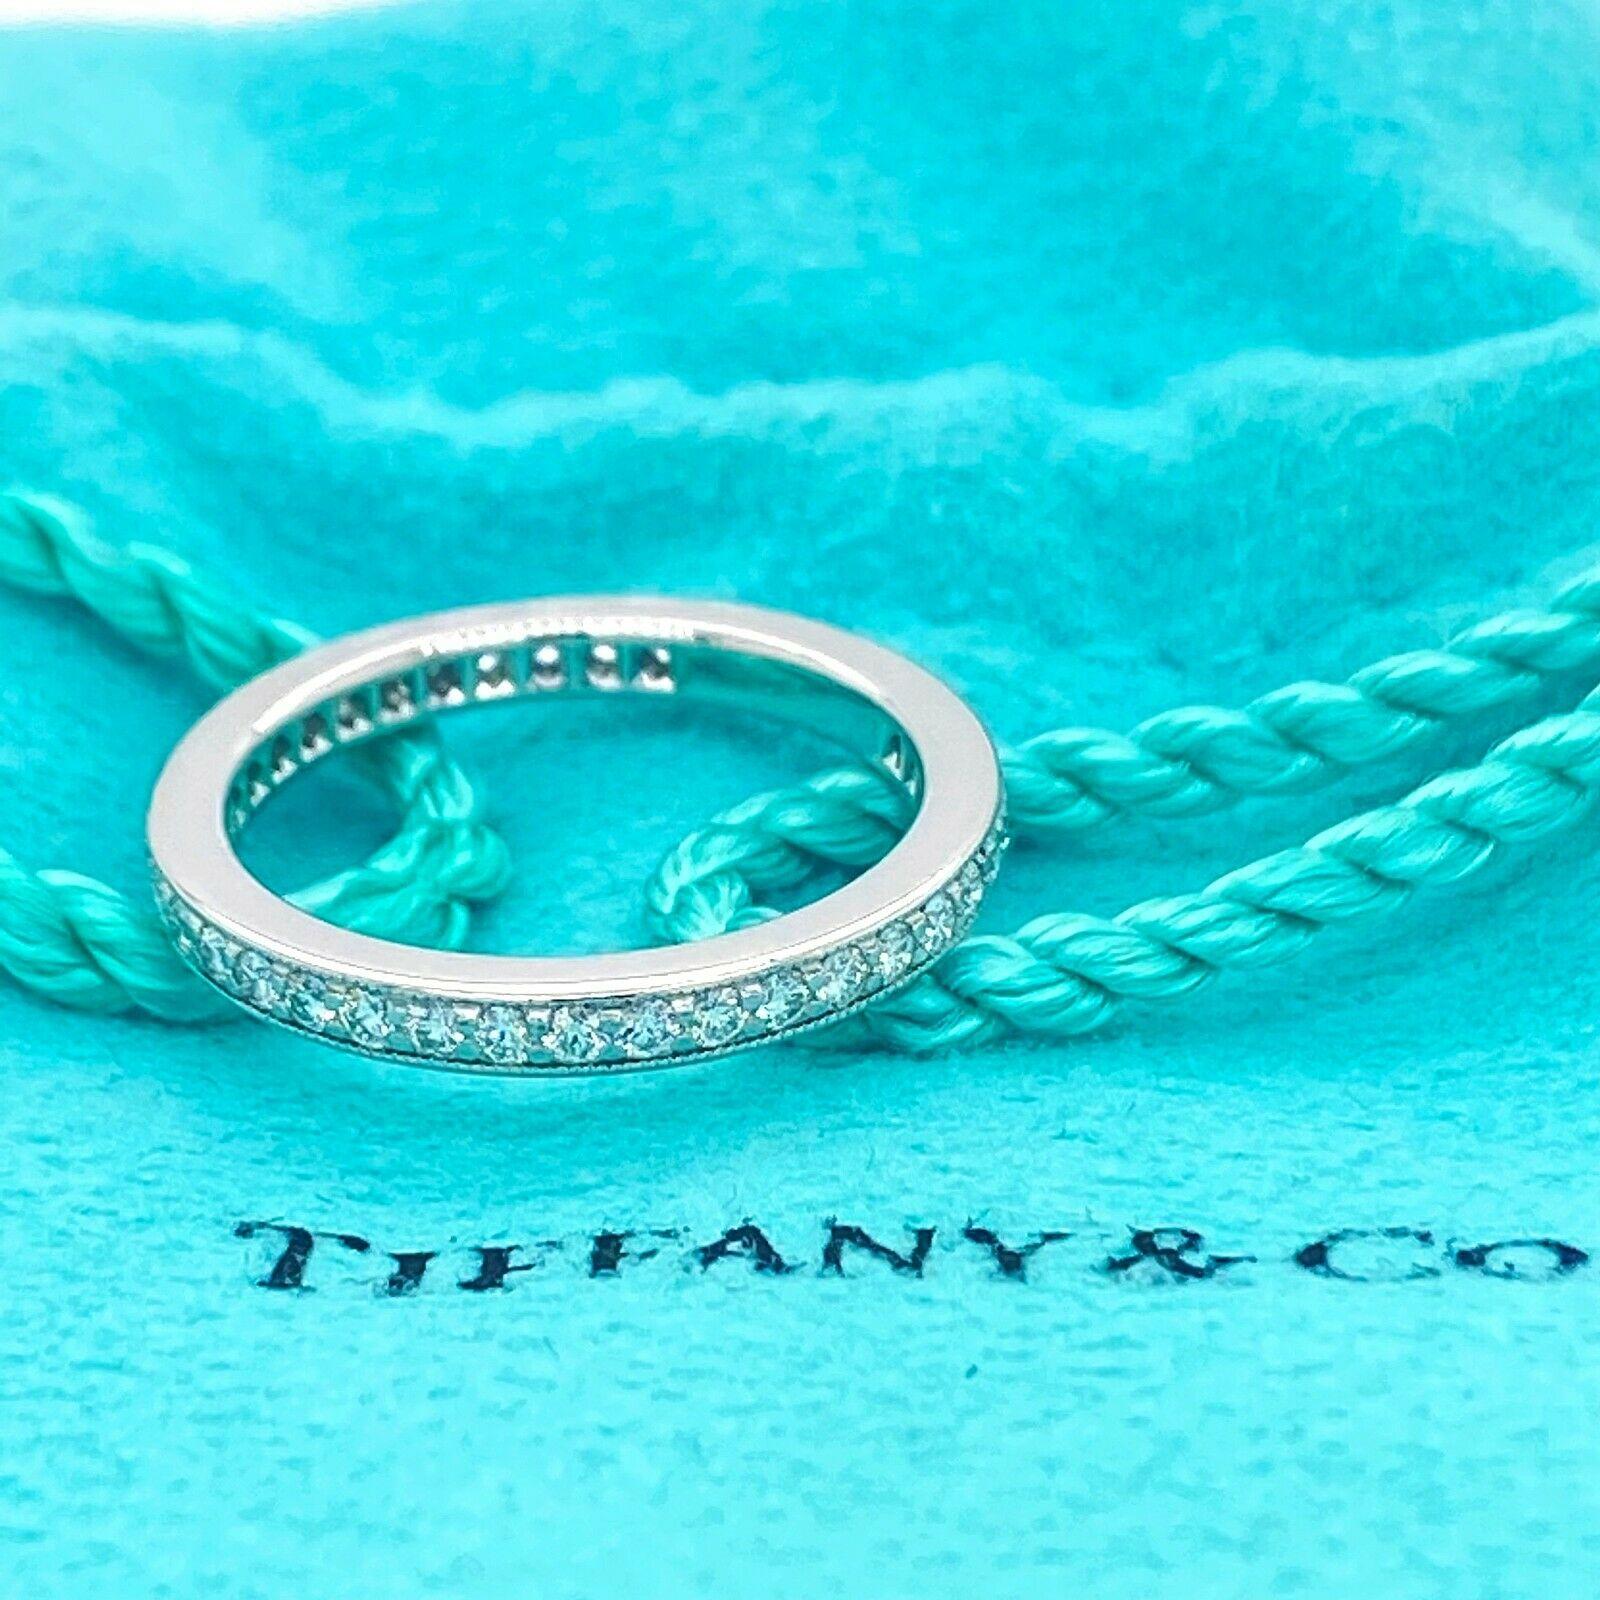 Tiffany & Co Legacy Collection Full Circle Band Ring
Style:  Full-Circle Bead-Set with Milgrain Edge
Metal:   Platinum PT950
Size: 6
Measurements:  2 MM Width
TCW:  0.44 tcw
Main Diamond:  Round Brilliant Diamonds
Color & Clarity:  G, VVS
Hallmark: 